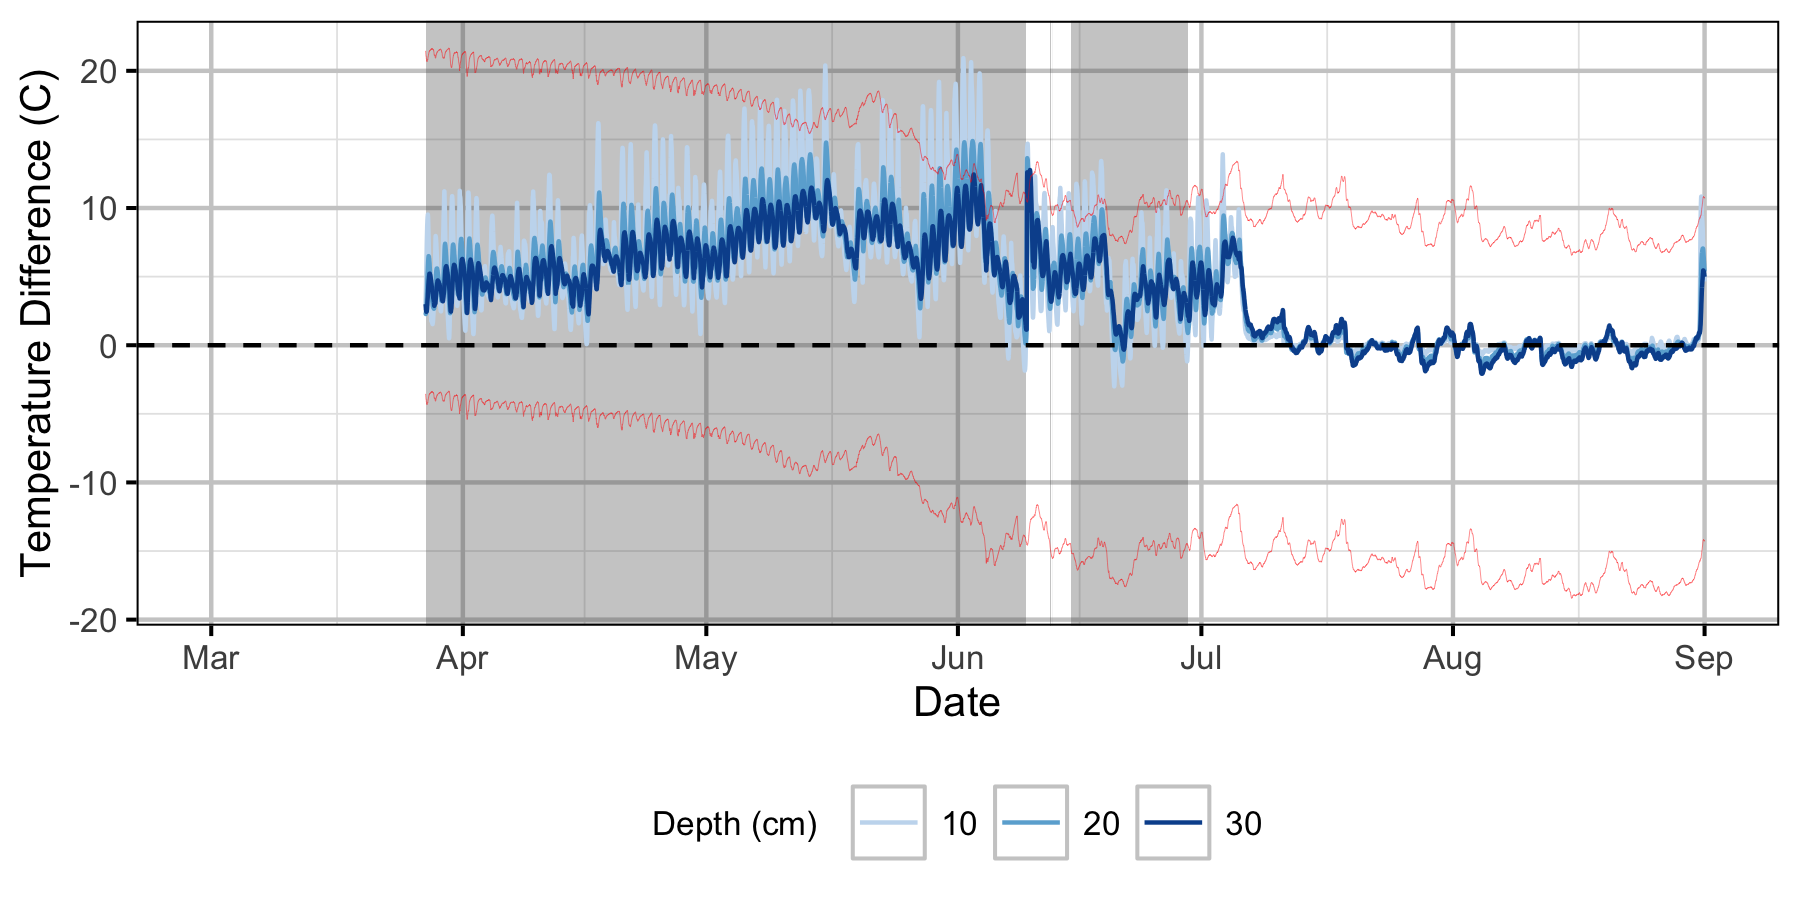 figures/Sensor Data/Relative Gravel Temperature Stations/Norns Creek Fan/Station12.png